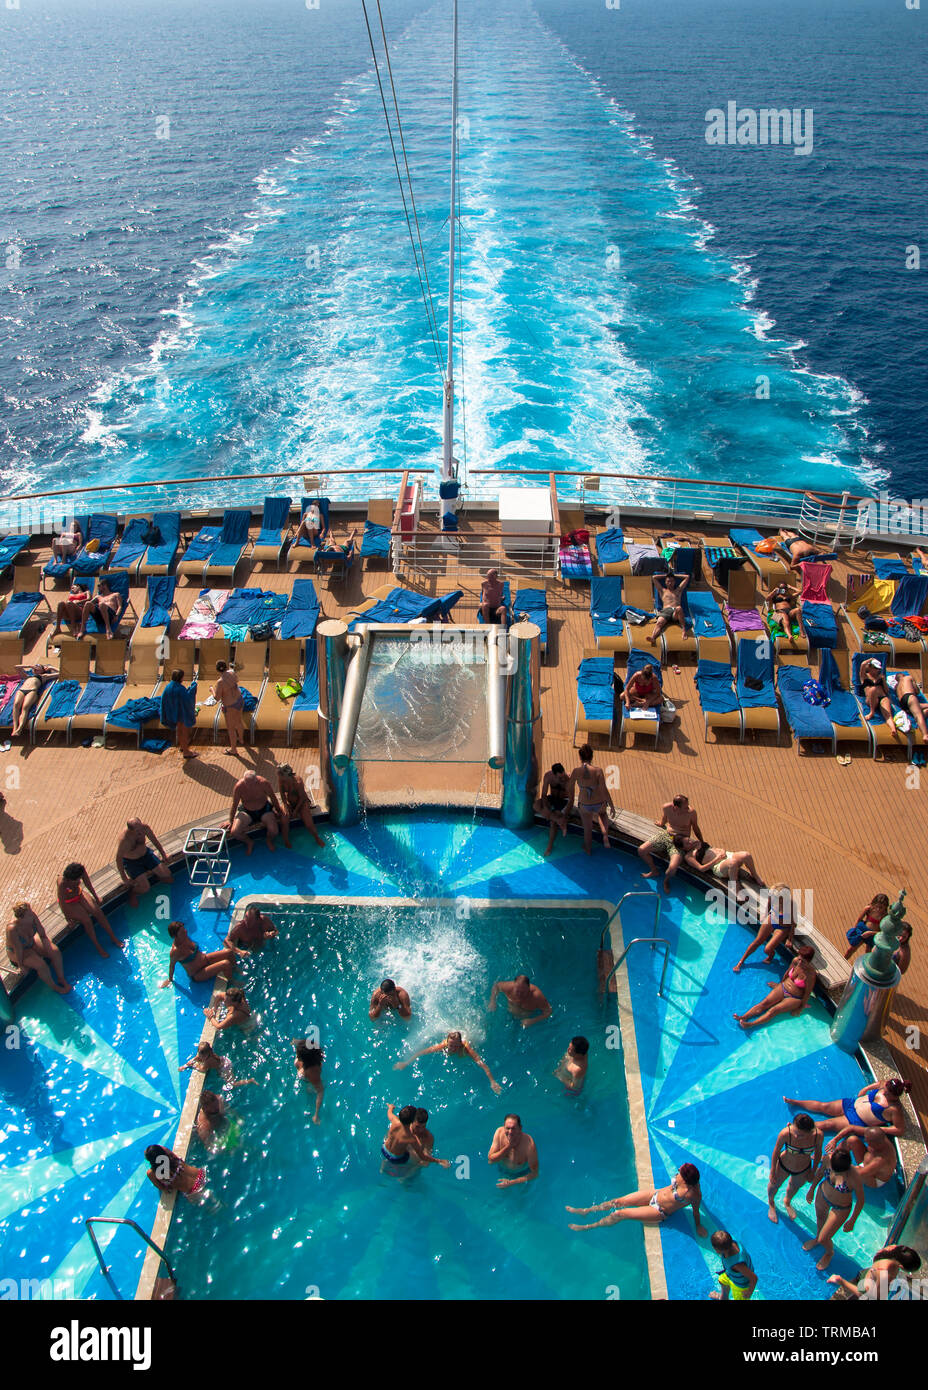 Cruise ship in the Mediterranean Sea Stock Photo